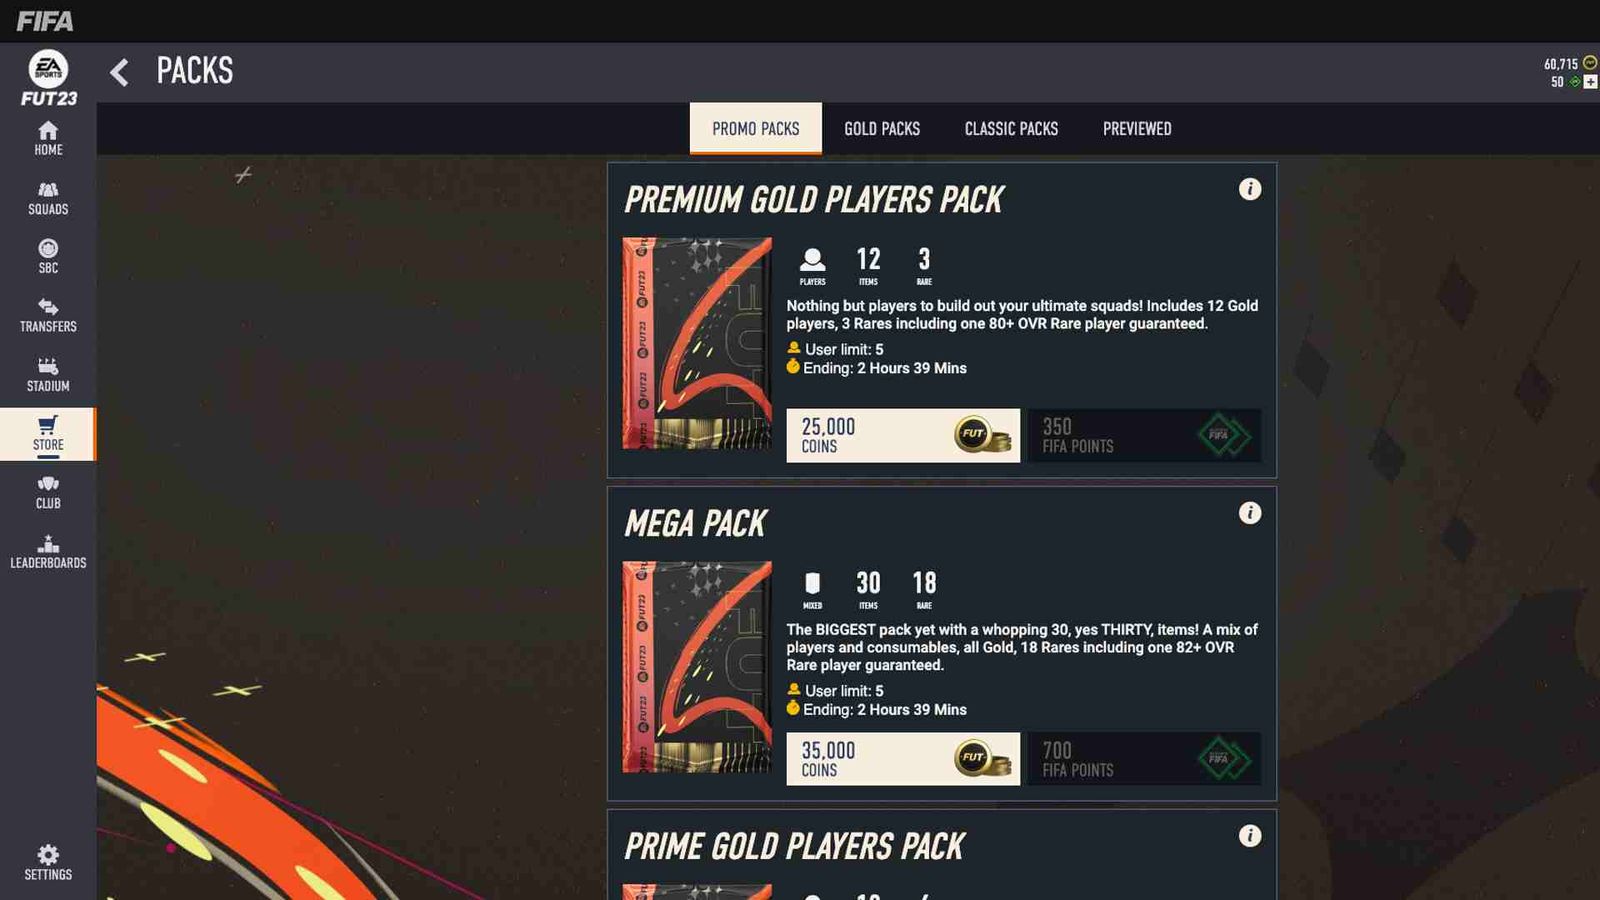 Image of the packs menu in the FIFA 23 web app.